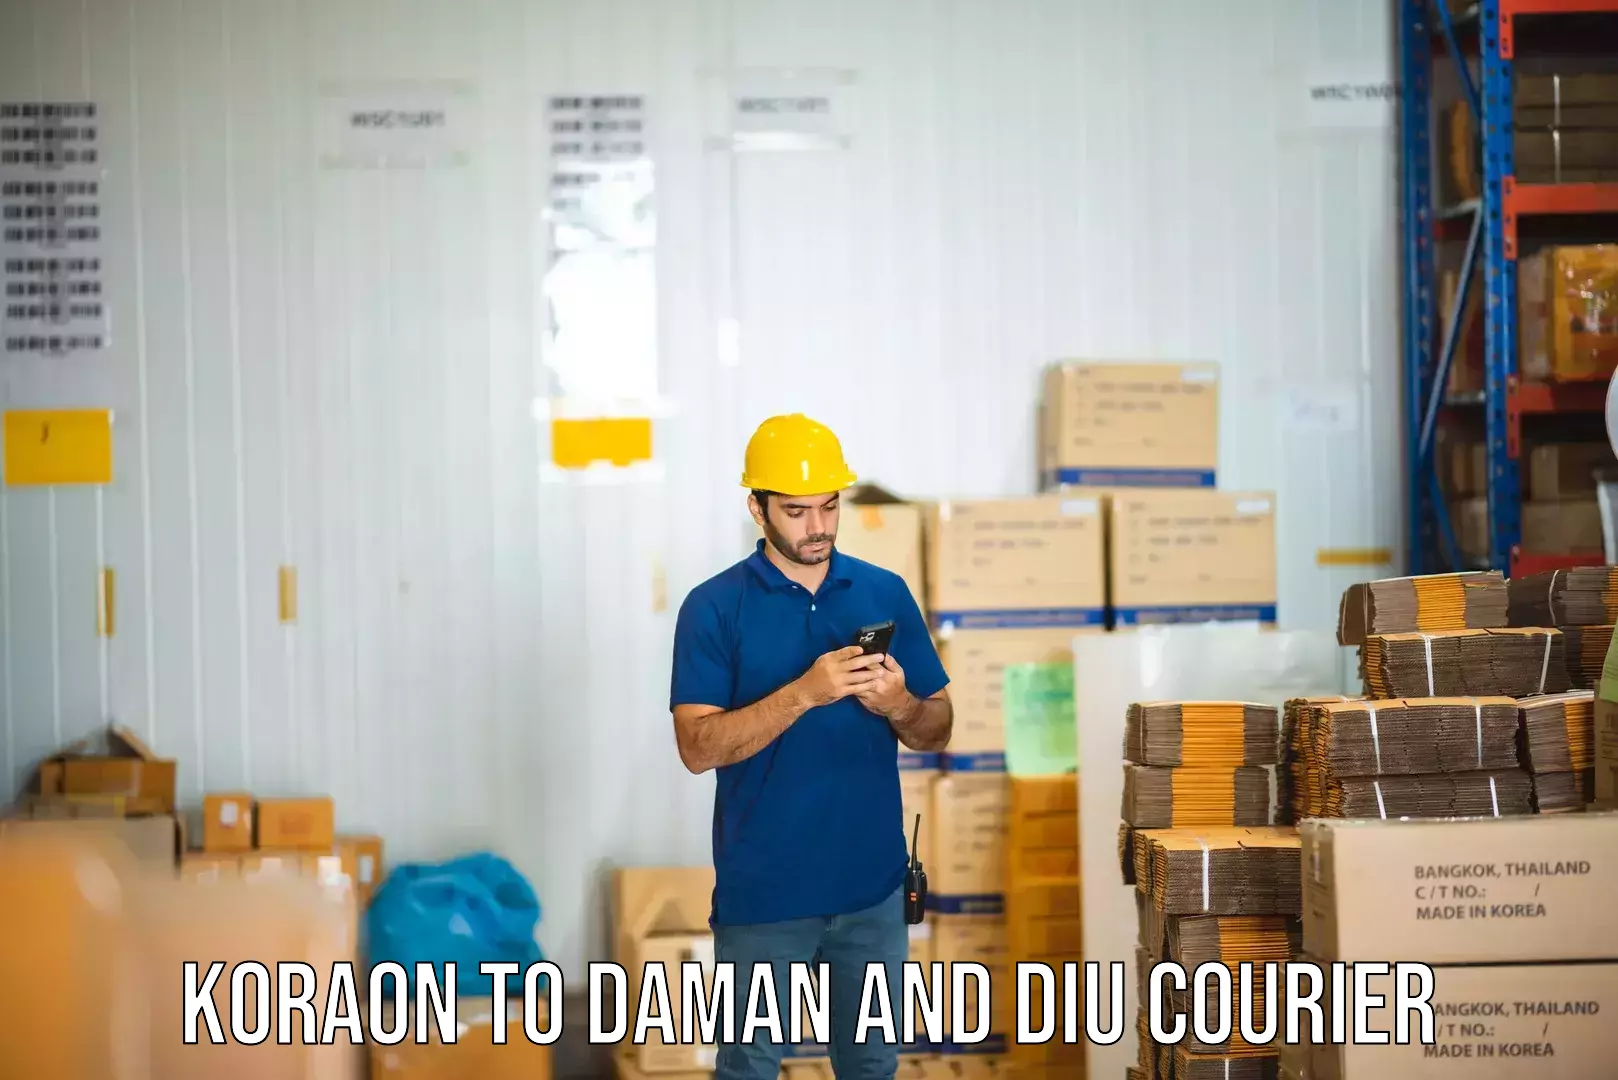 Bulk courier orders Koraon to Daman and Diu